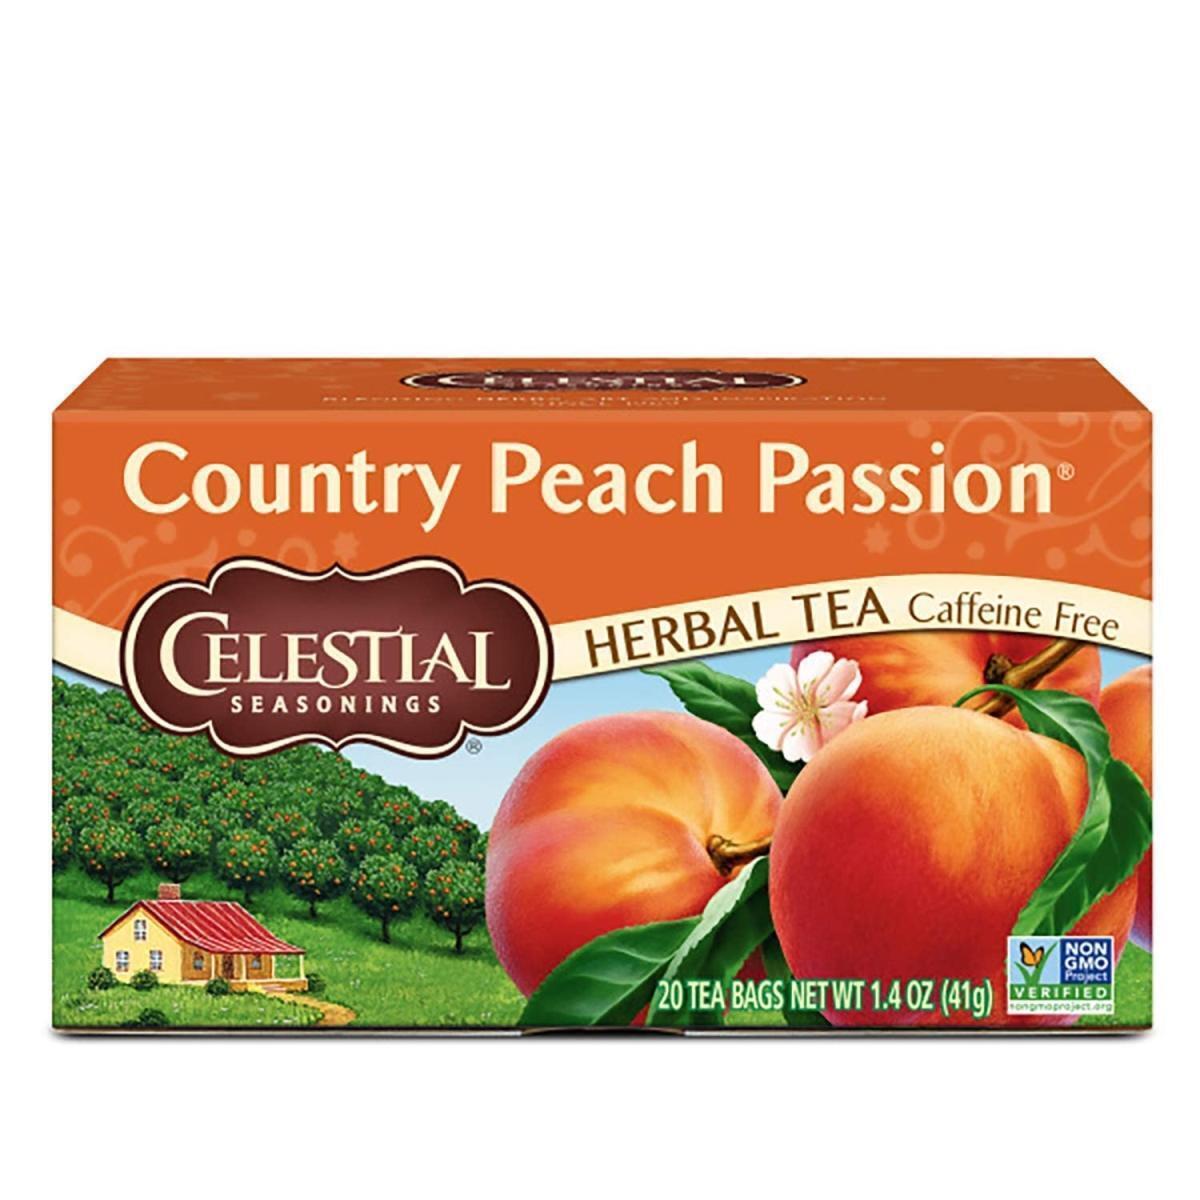 Celestial Season 2200595 Country Peach Passion Herbal Tea - Pack of 6 - 16 Bag